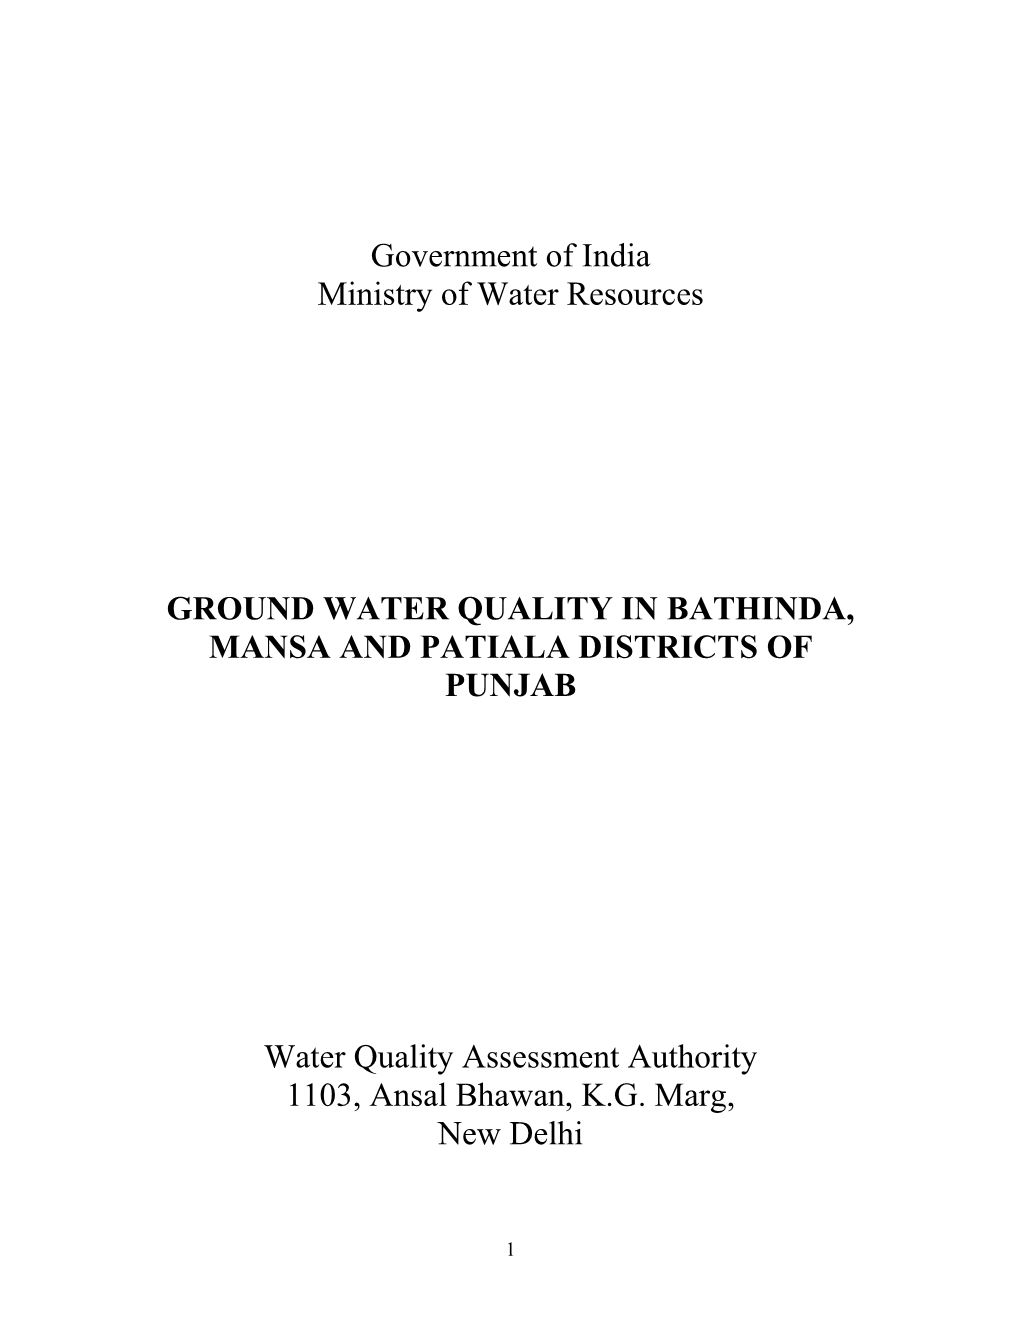 Ground Water Quality of Punjab